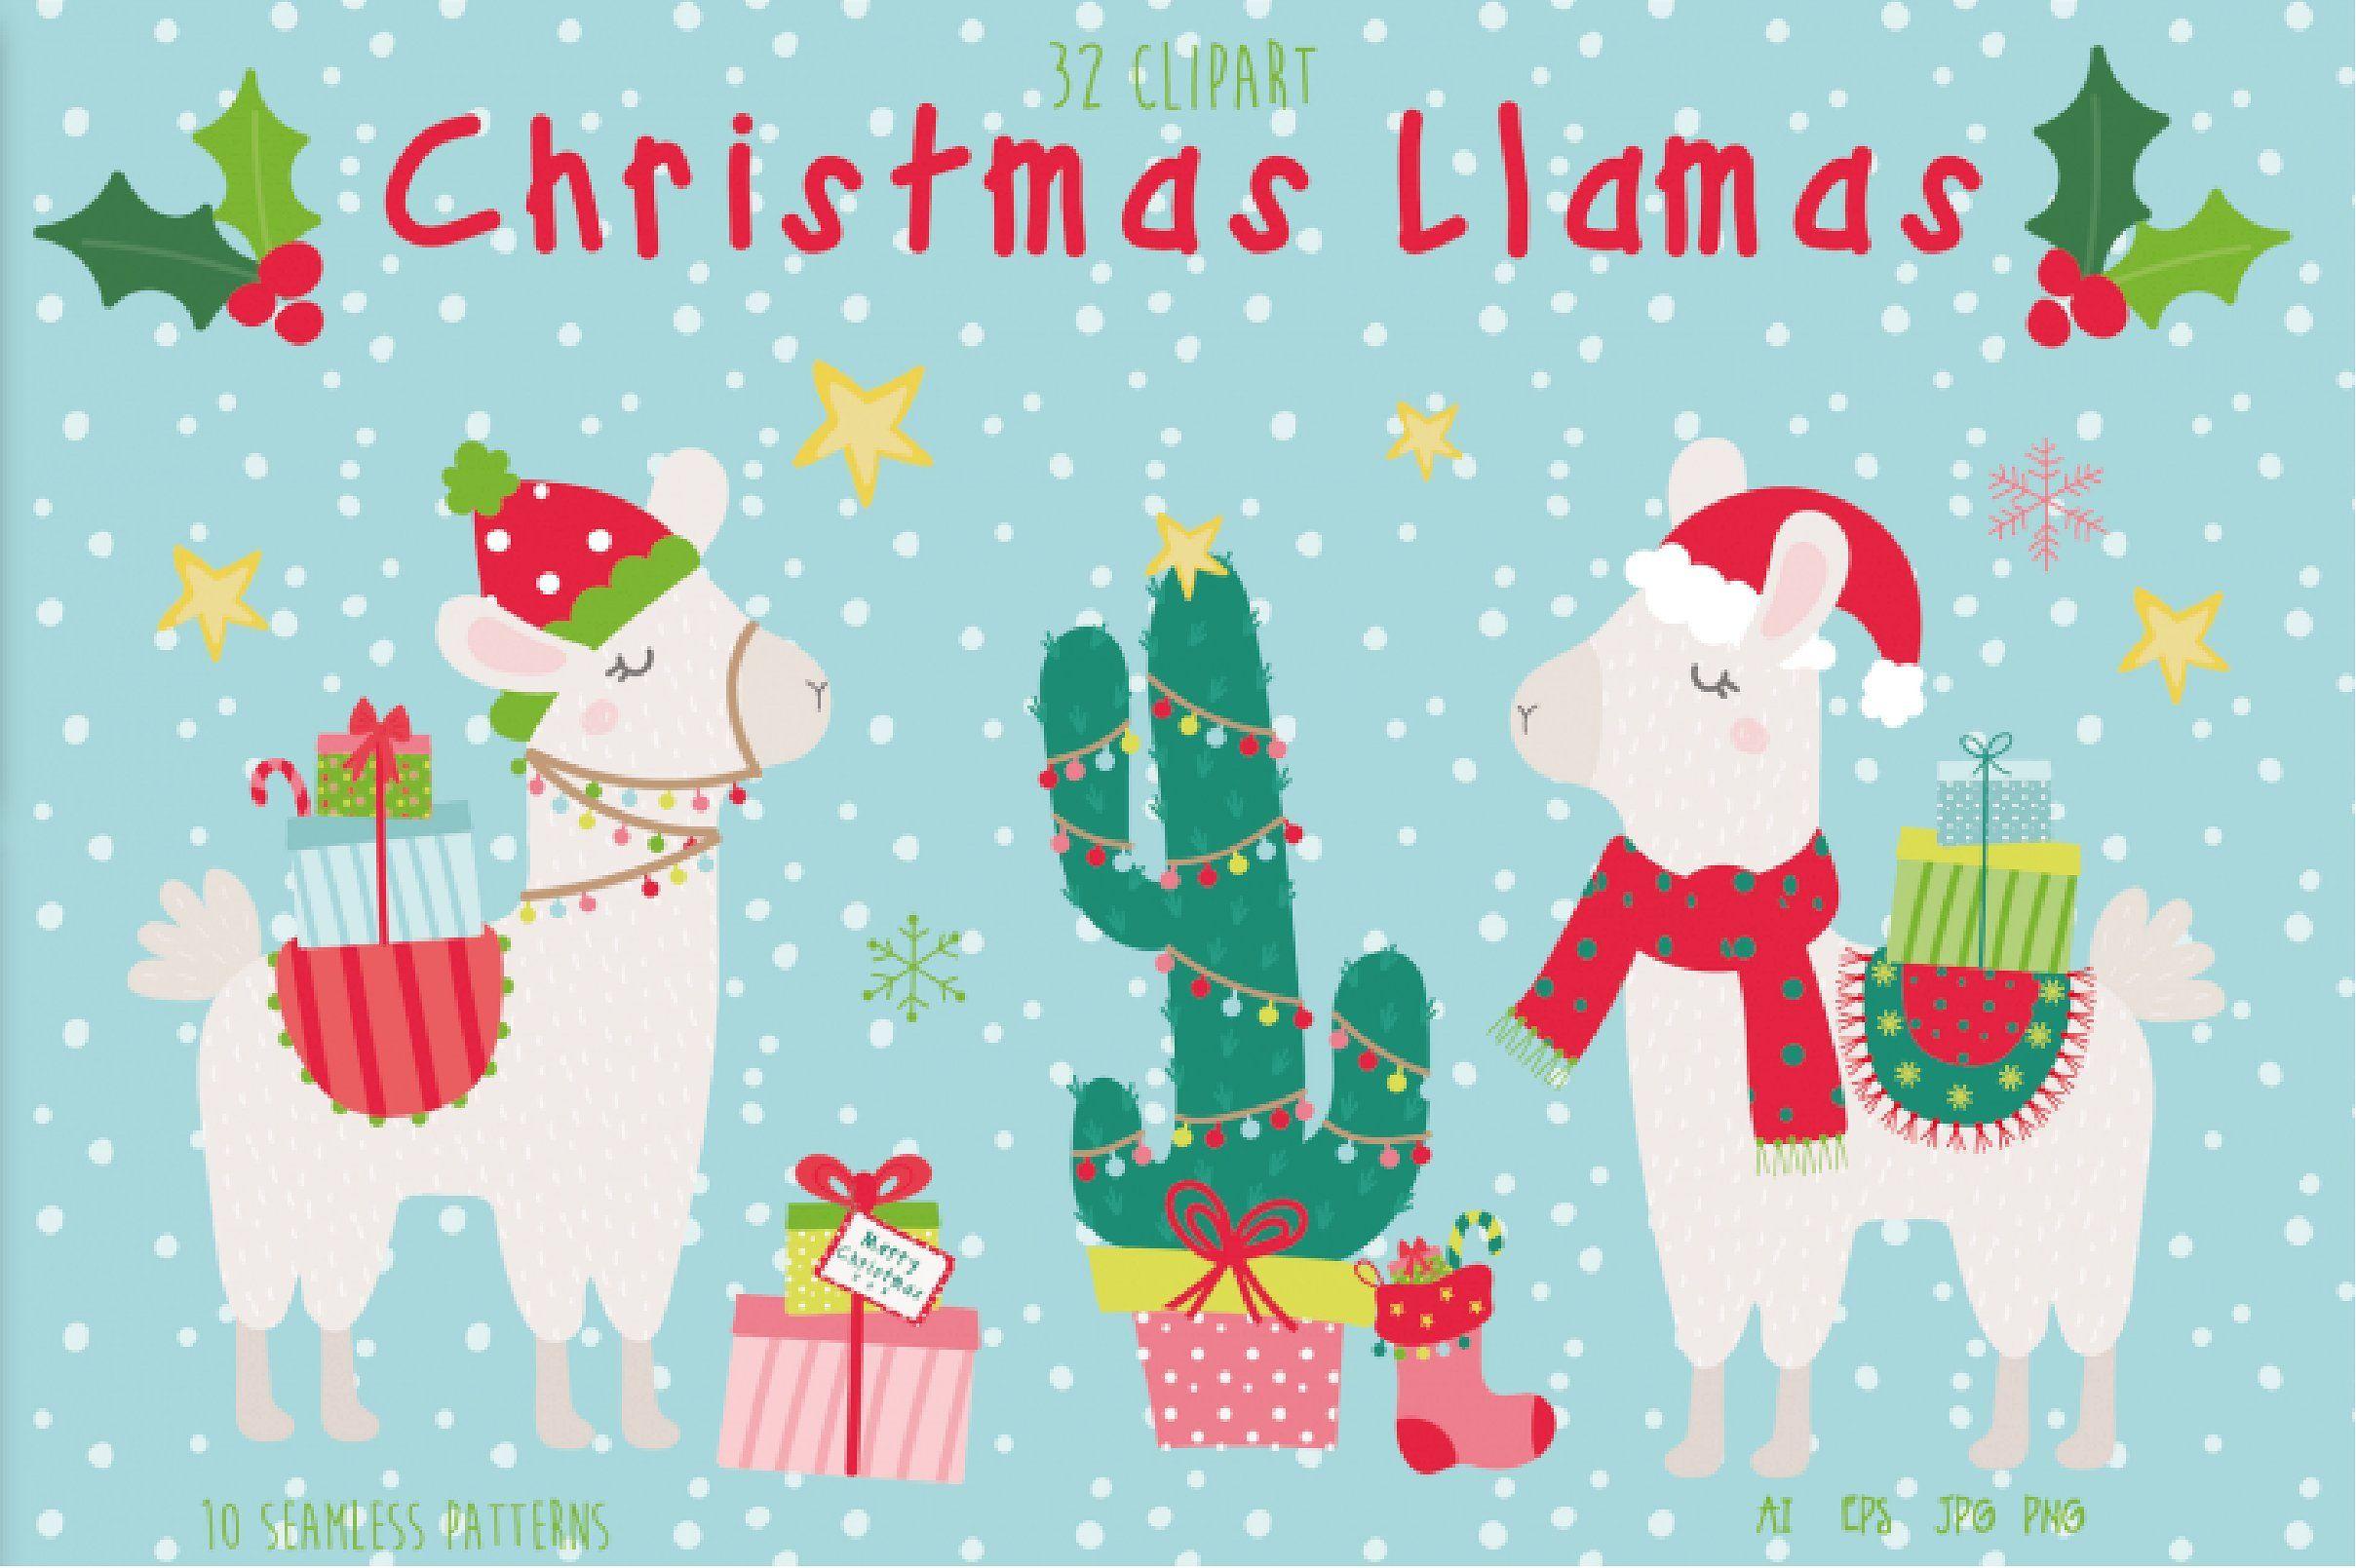 NEW Christmas Bundle 2 #LLAMAS#included#CHRISTMAS#festive